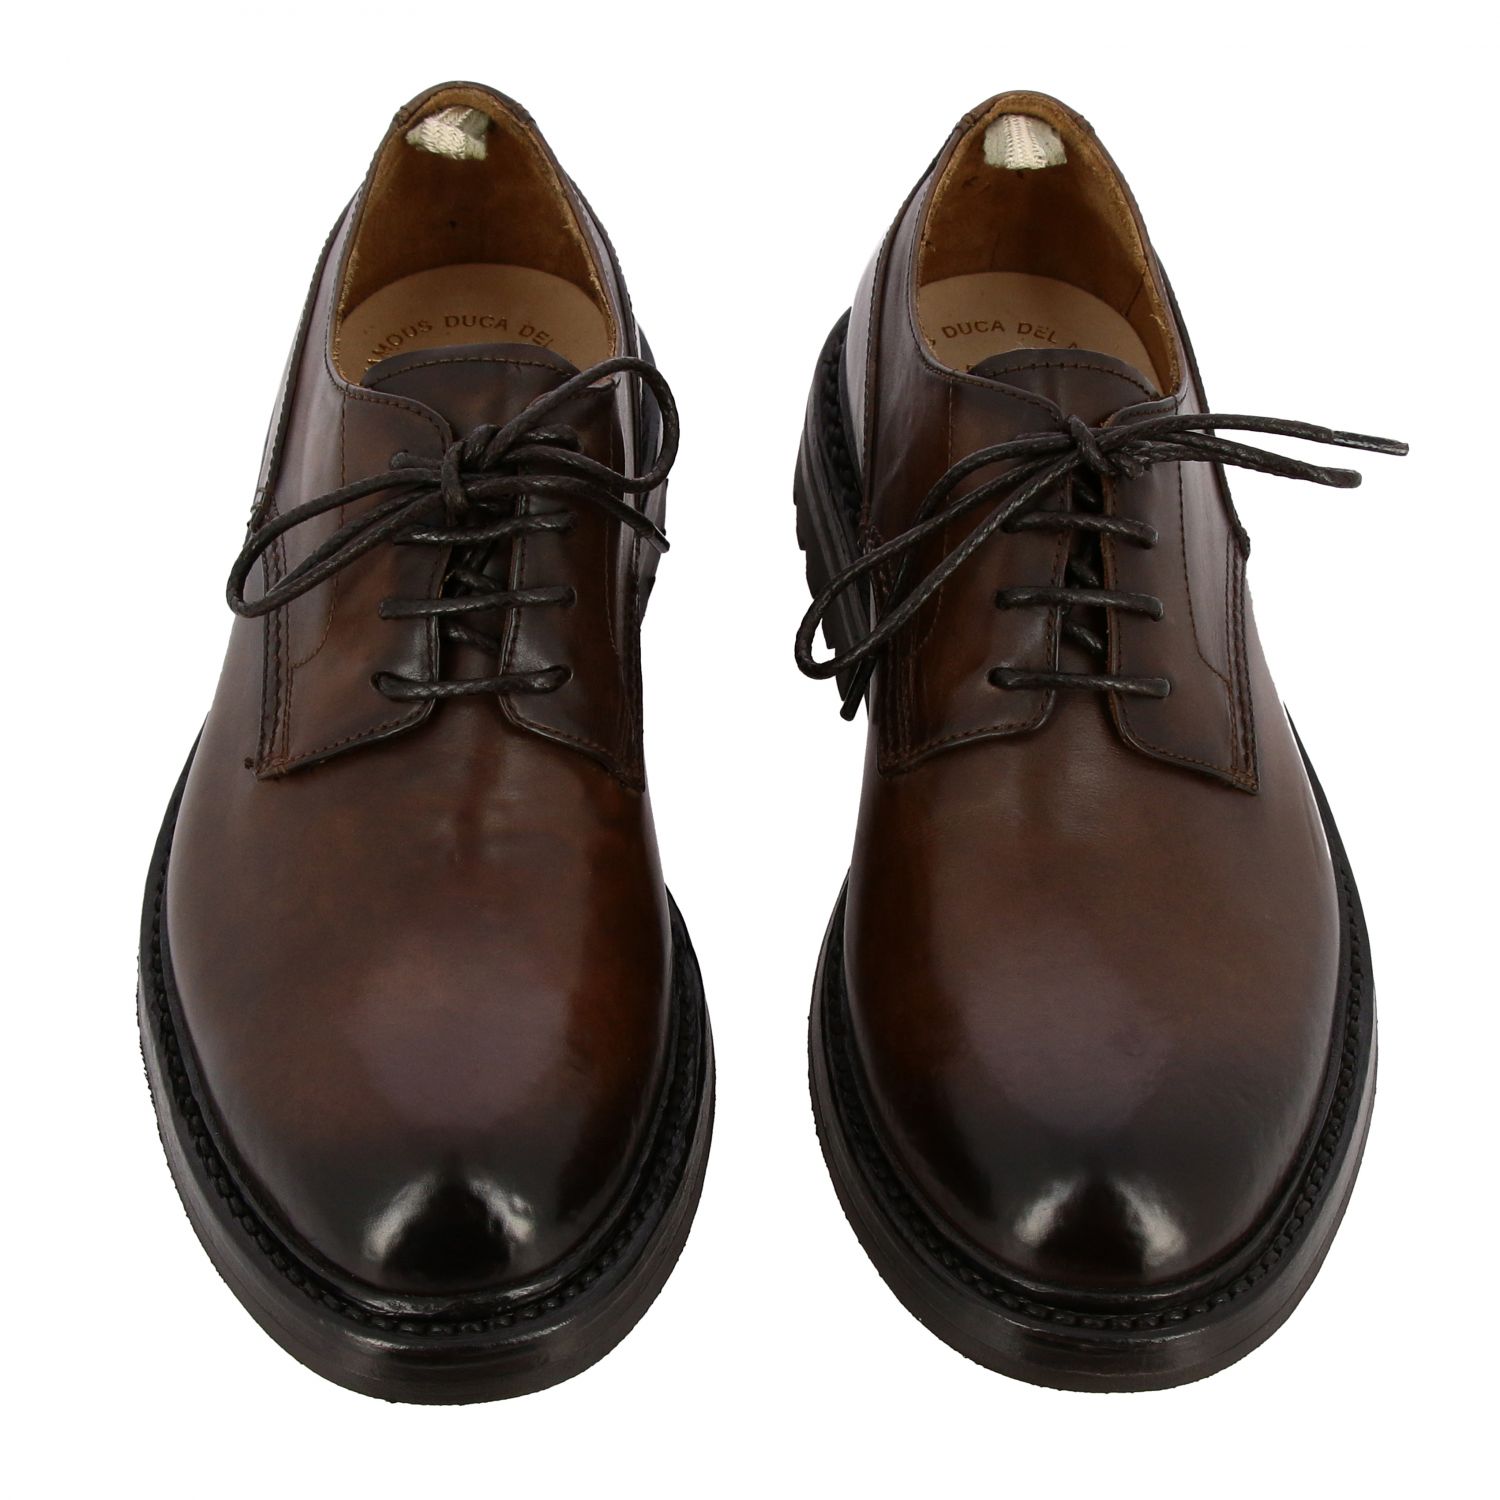 Officine Creative Outlet: brogue shoes for man - Dark | Officine ...